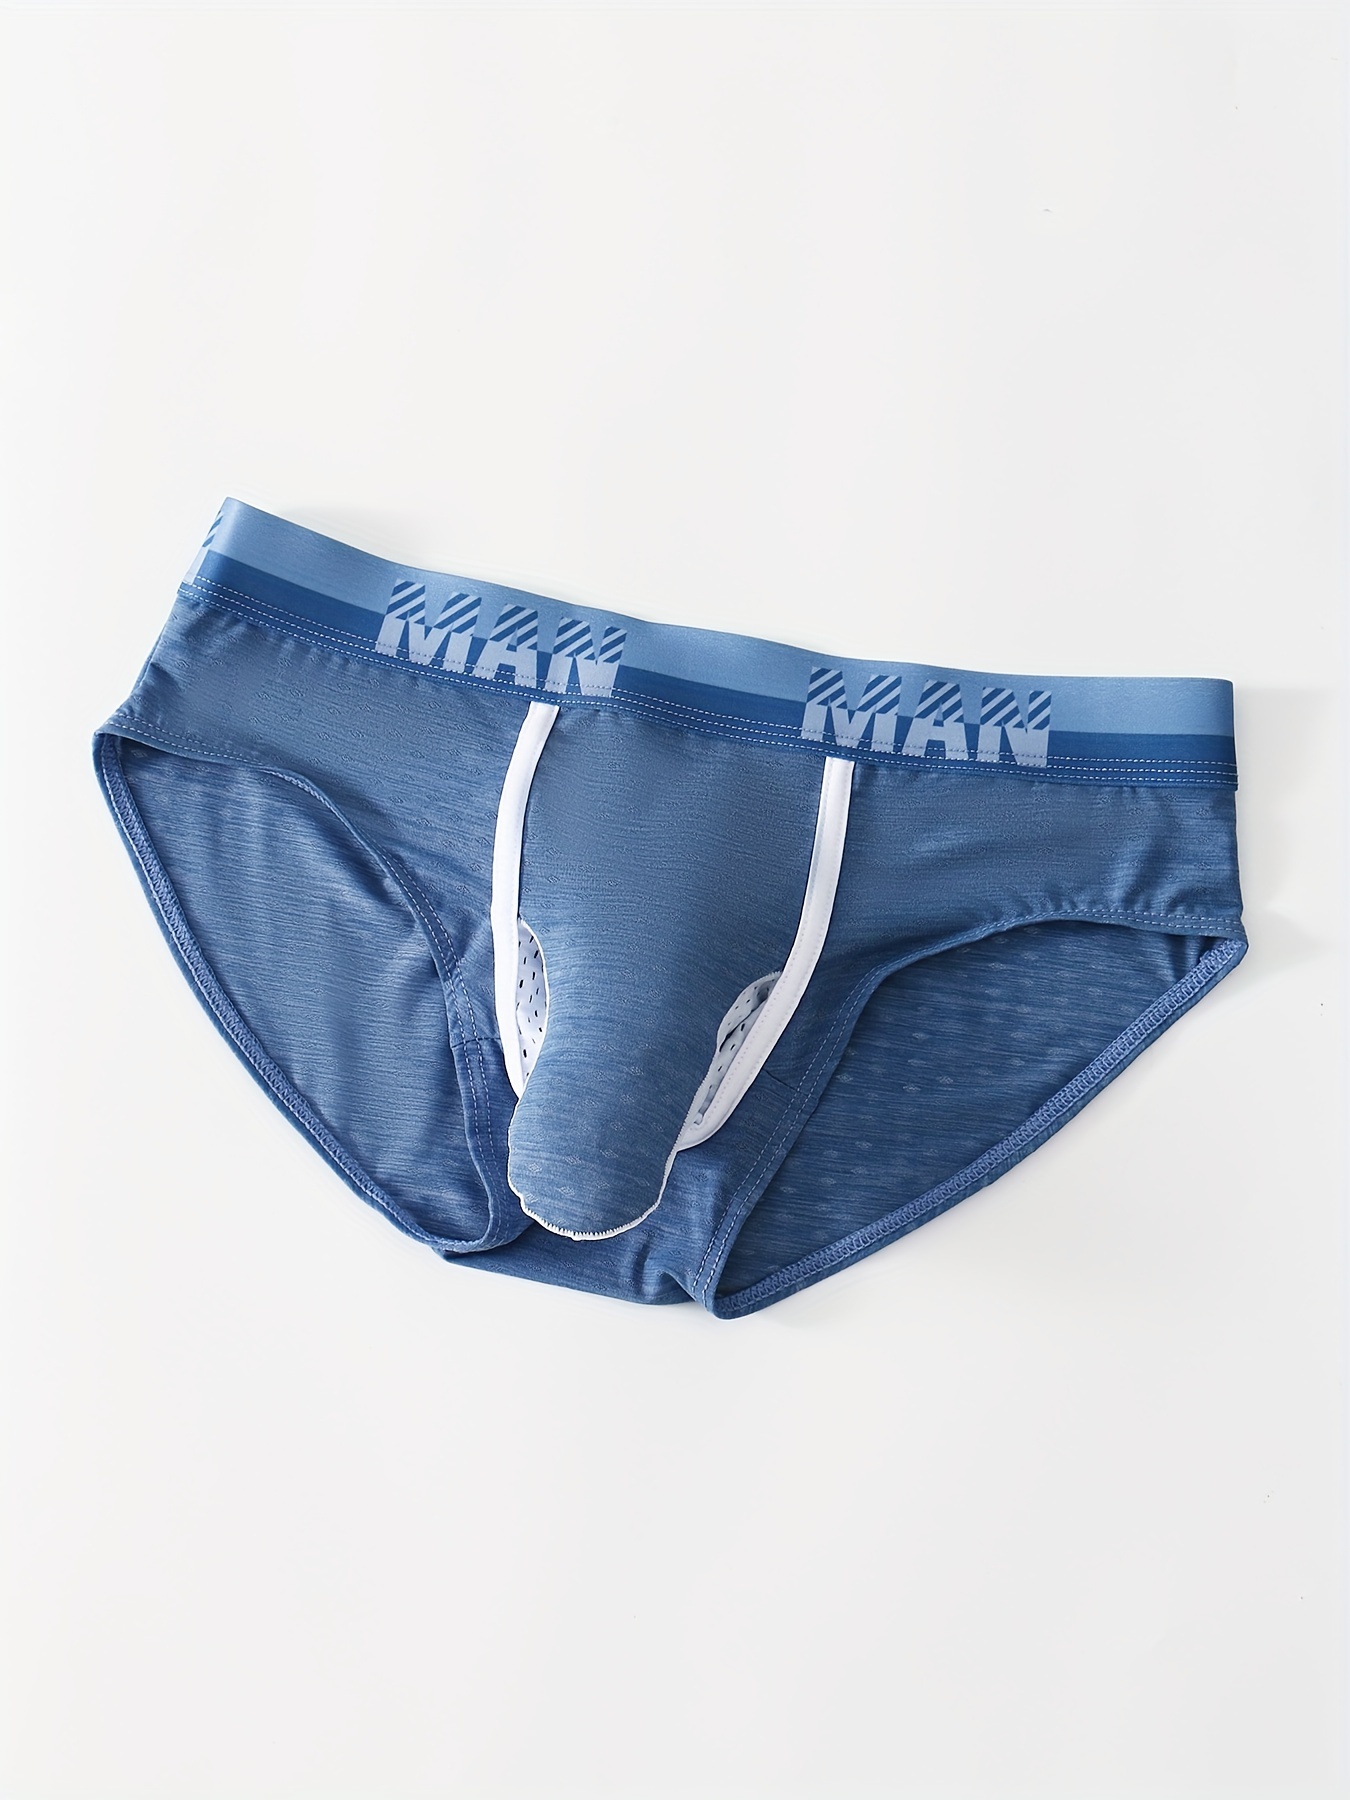 Althee Disposable Panties For Women, Men, Bikini Panties, One Time